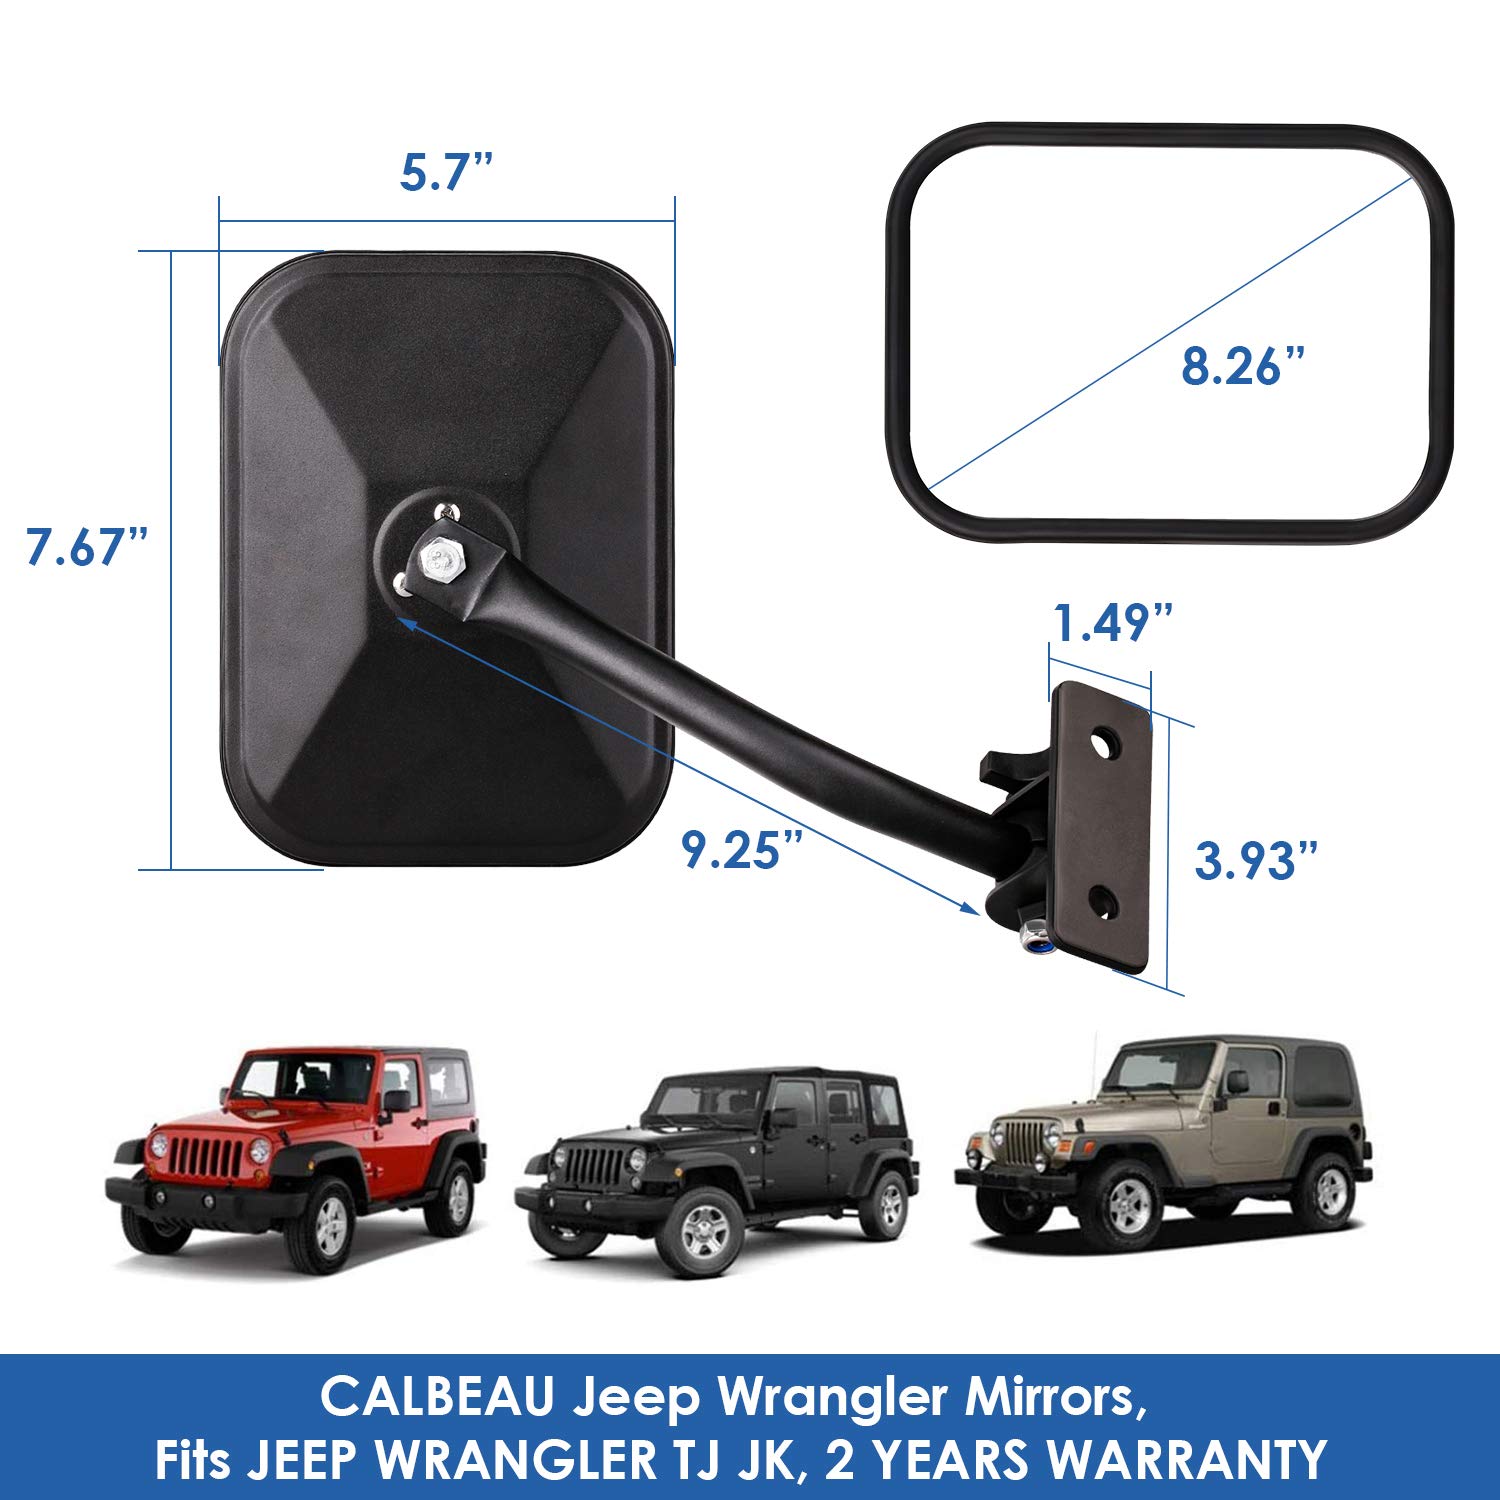 Mua CALBEAU Jeep Wrangler Mirrors, 2 Pack Jeep Mirrors Doors Off fit TJ JK,  Doorless Mirror for Jeep Wrangler, Easy to Install Door Off Mirror,  Doorless Jeep Mirrors for Safe Doors Off